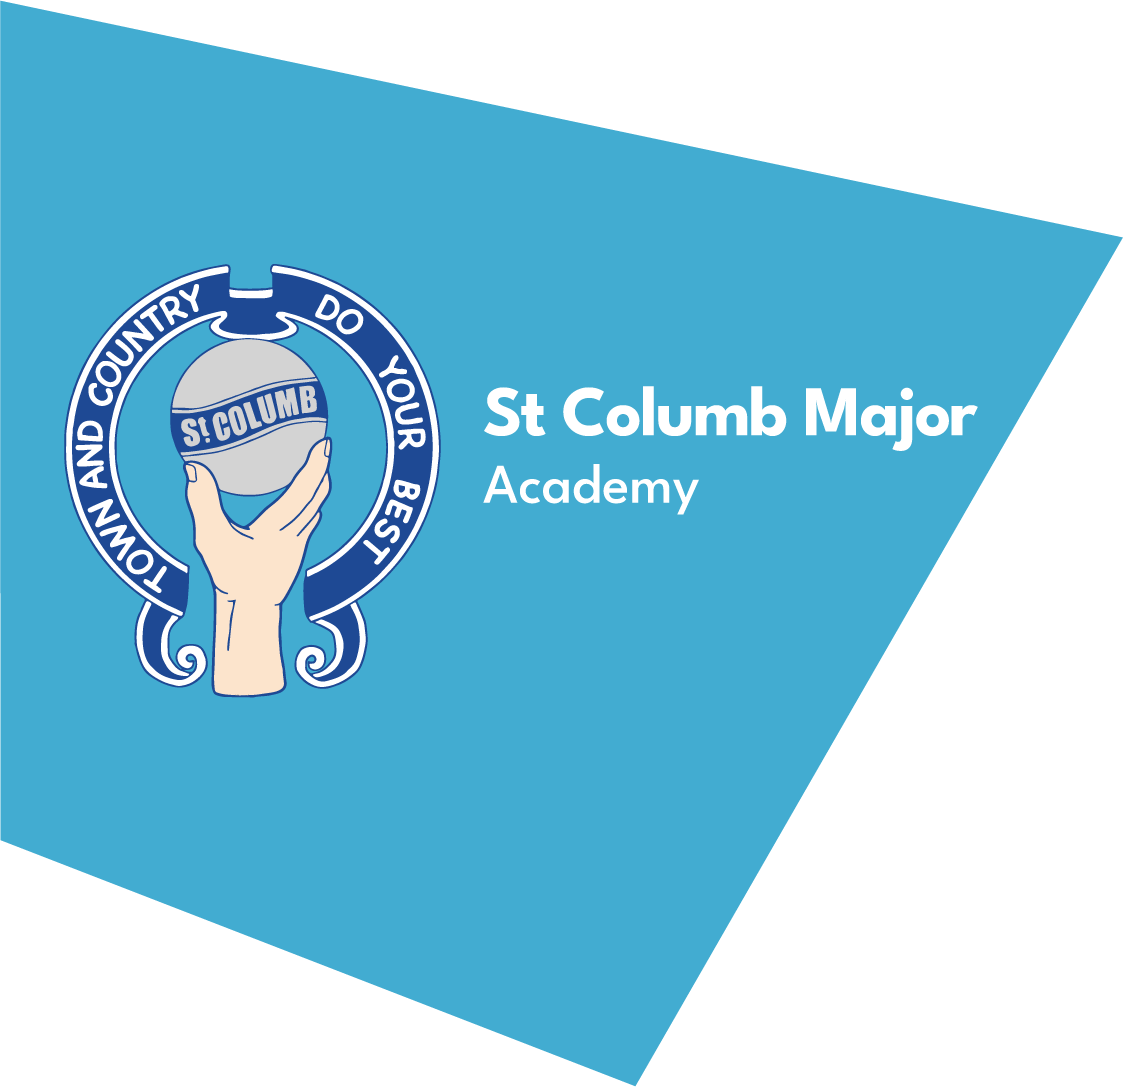 St Columb Major Academy logo